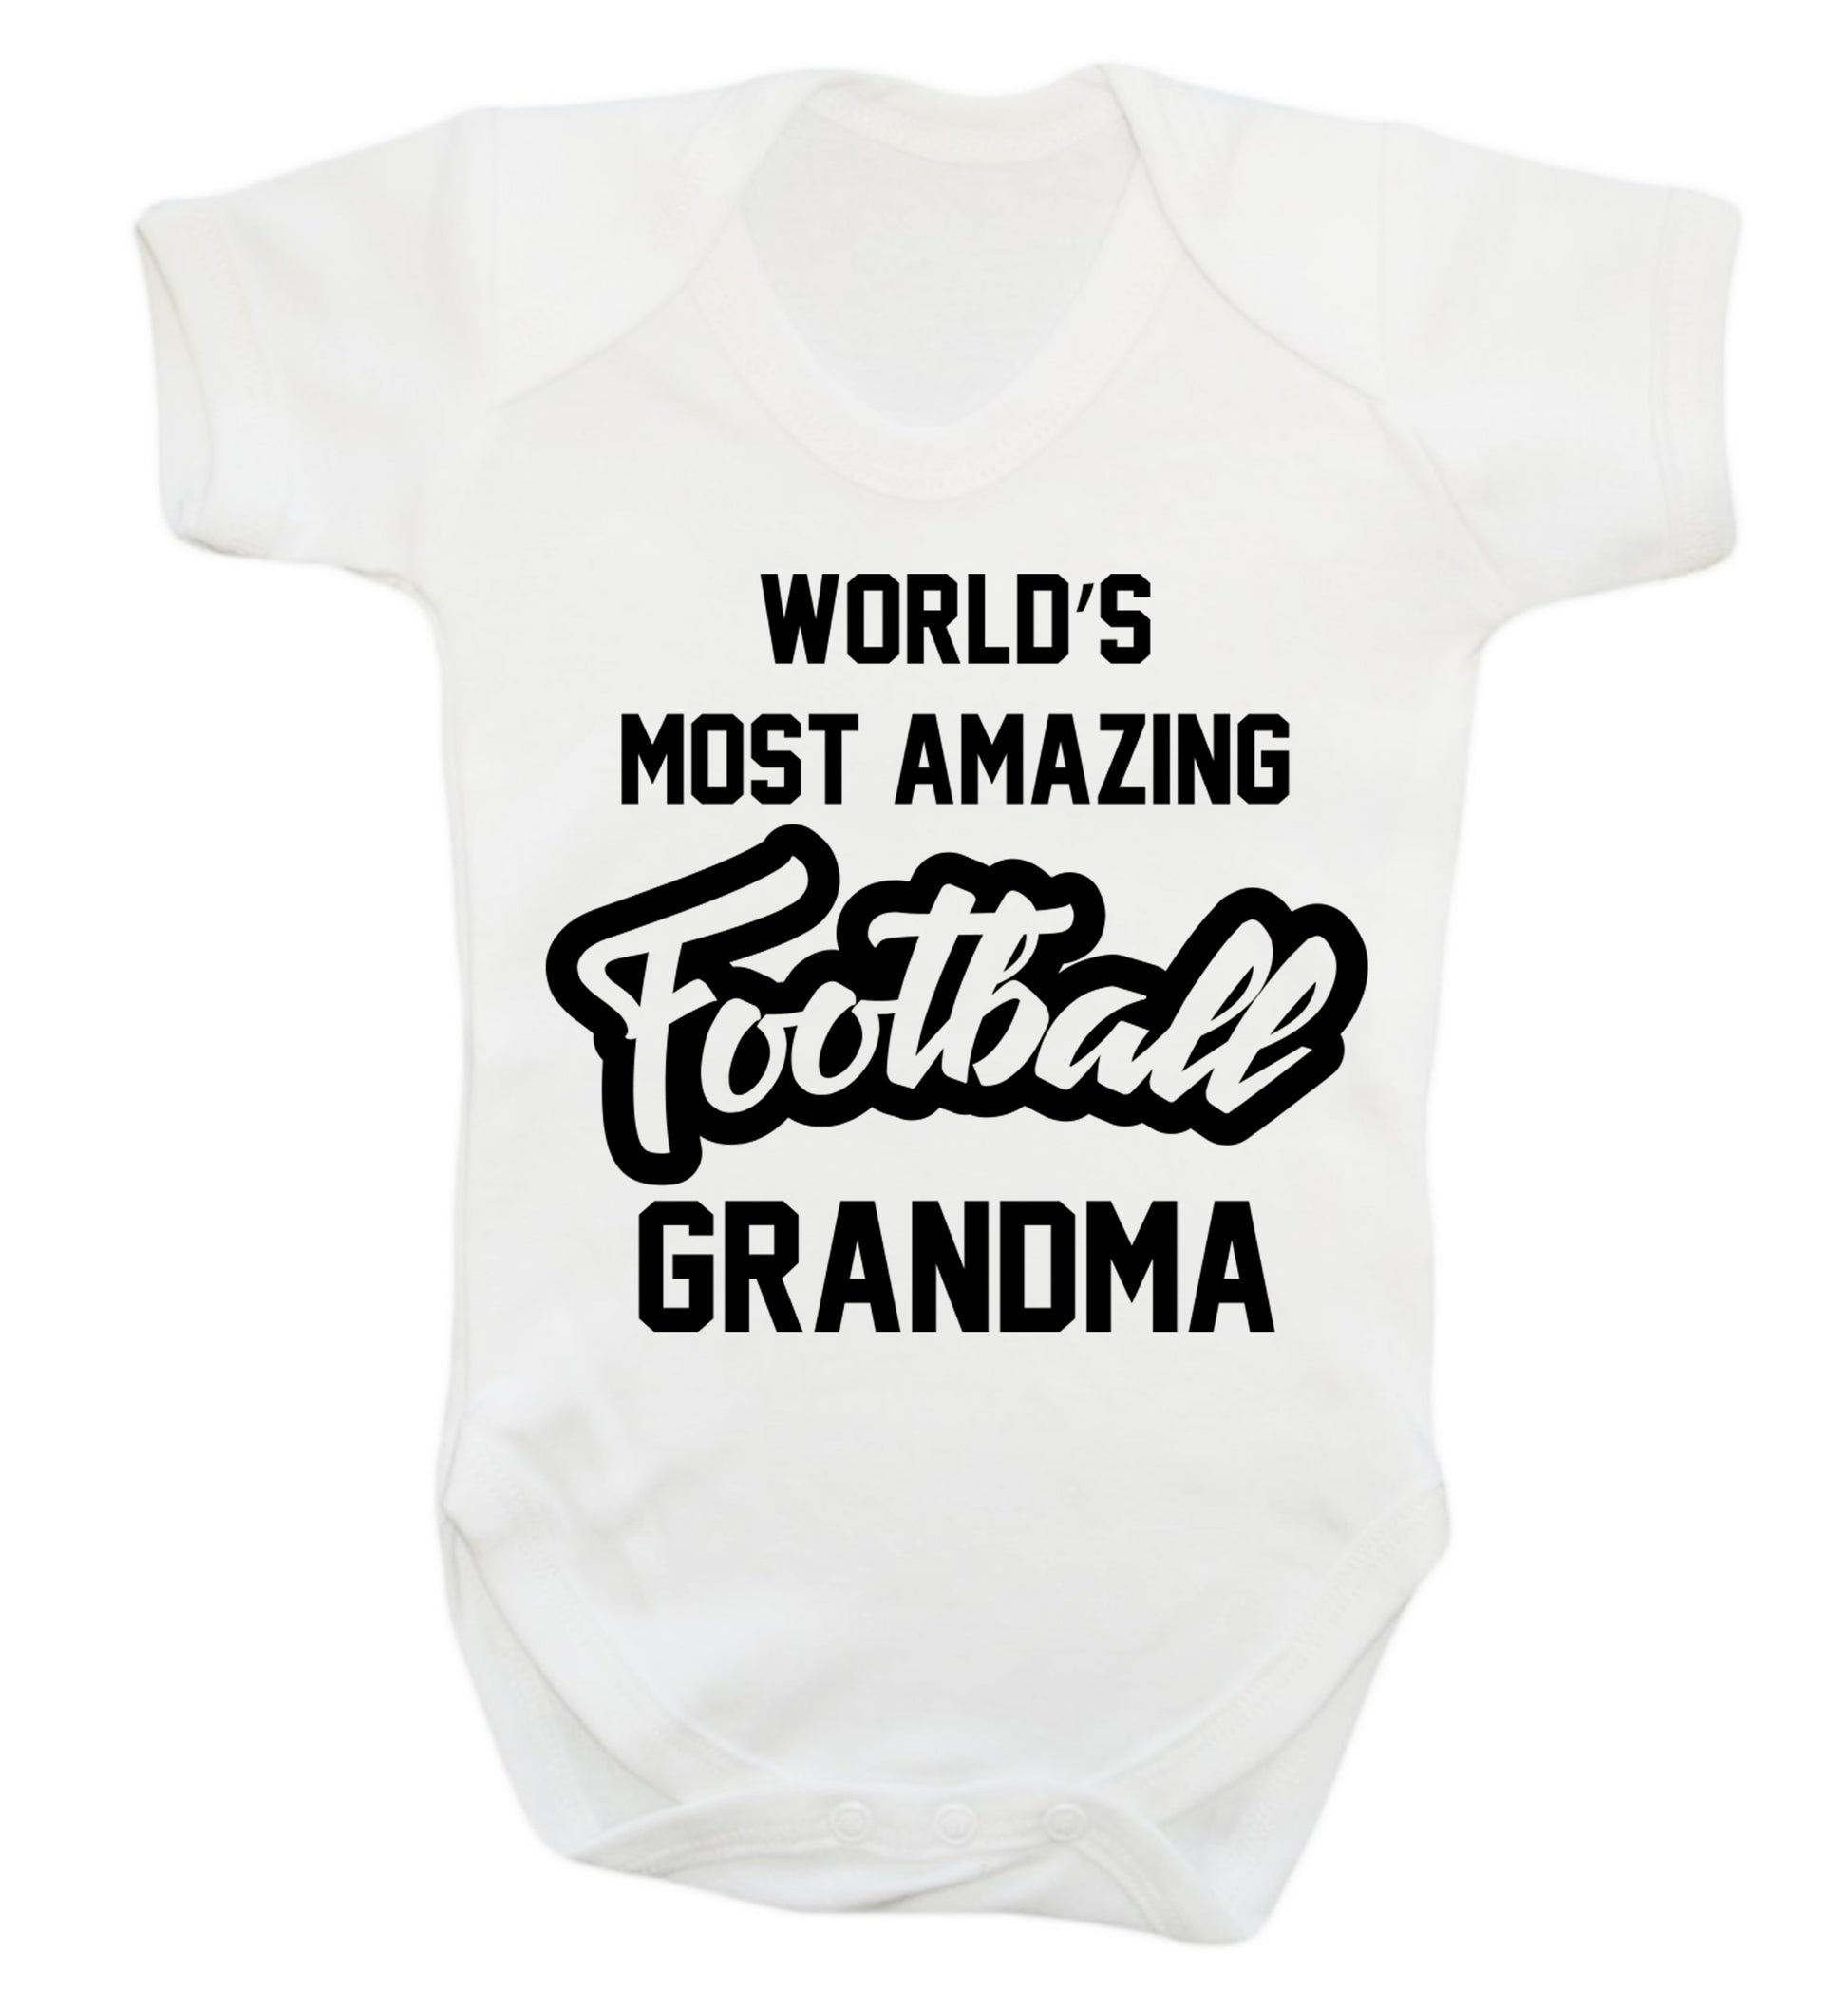 Worlds most amazing football grandma Baby Vest white 18-24 months